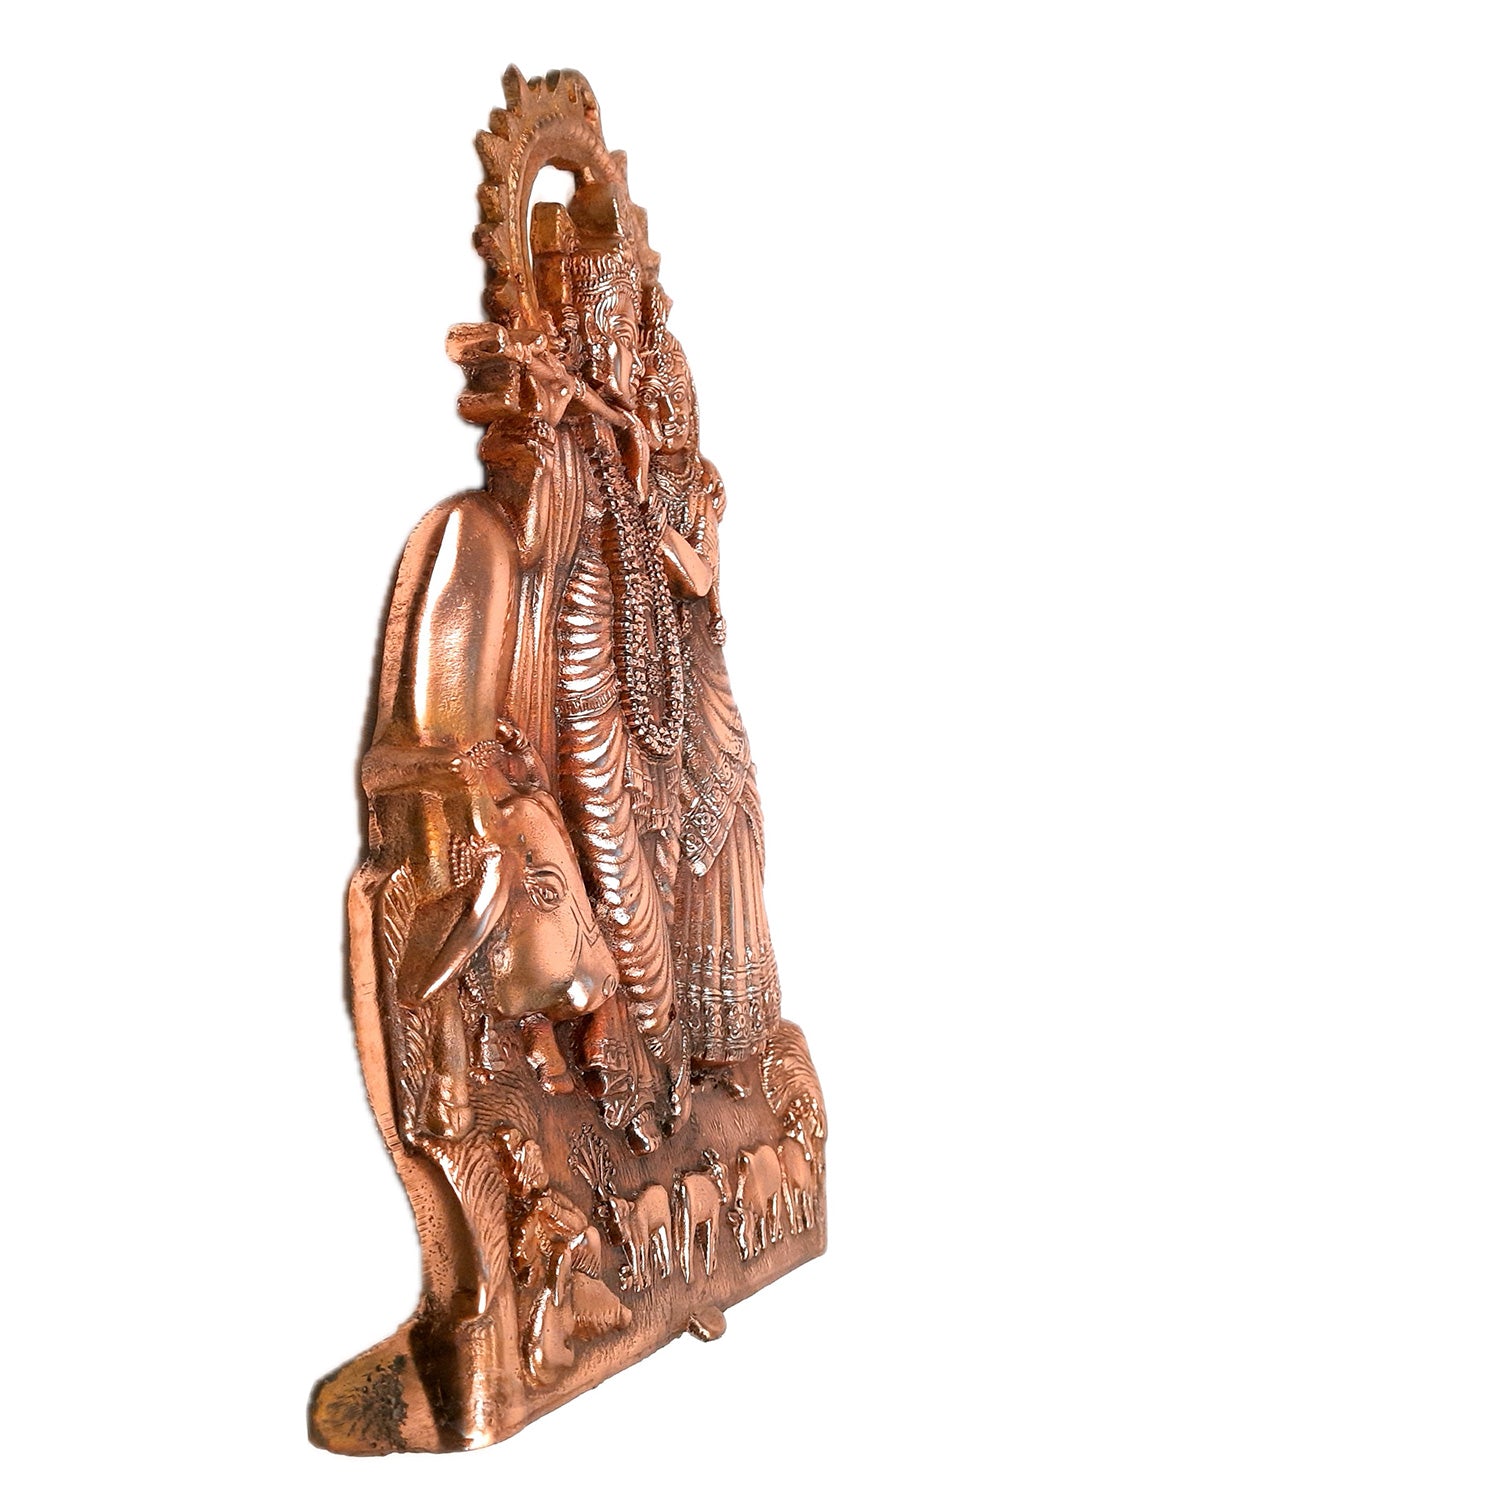 Radha Krishna Statue for Wall Decor | Radhe Krishna Wall Hanging Statue Idol | Religious & Spiritual Sculpture - for Gift, Home, Living Room, Office, Puja Room Decoration - 16 Inch - Apkamart